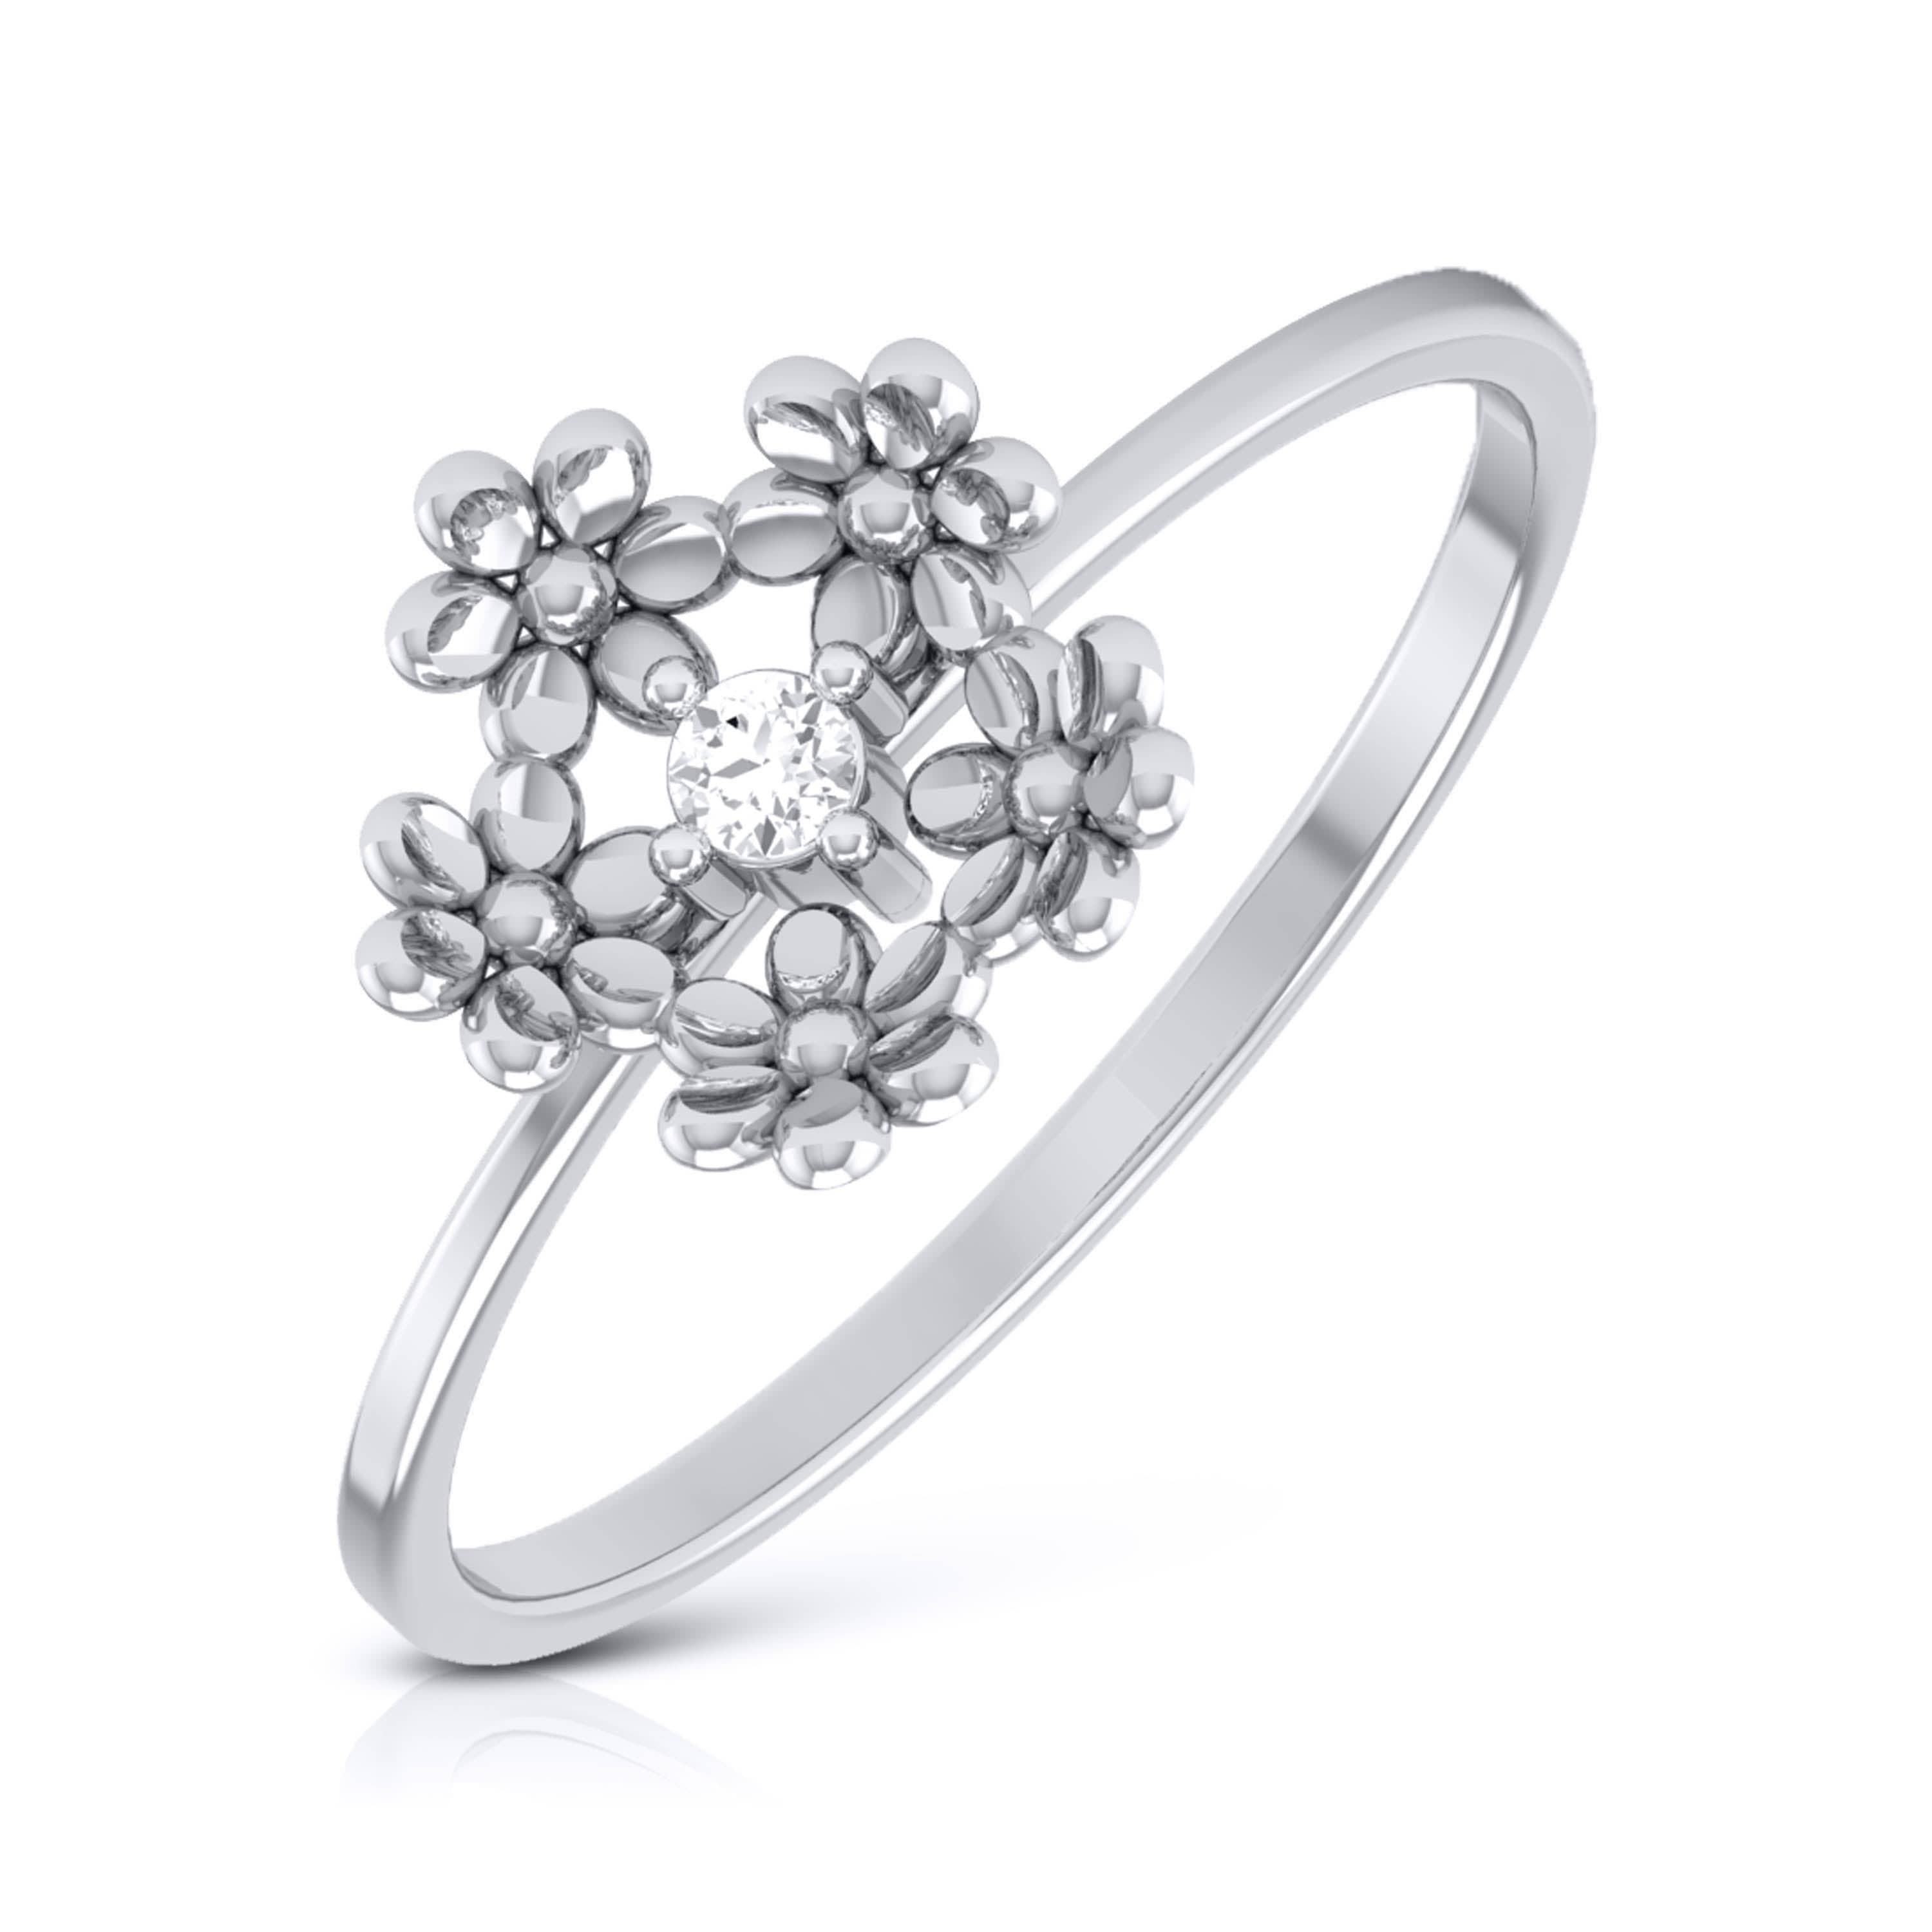 Men's Diamond Wedding Rings Australia - DORA Ring 577A11